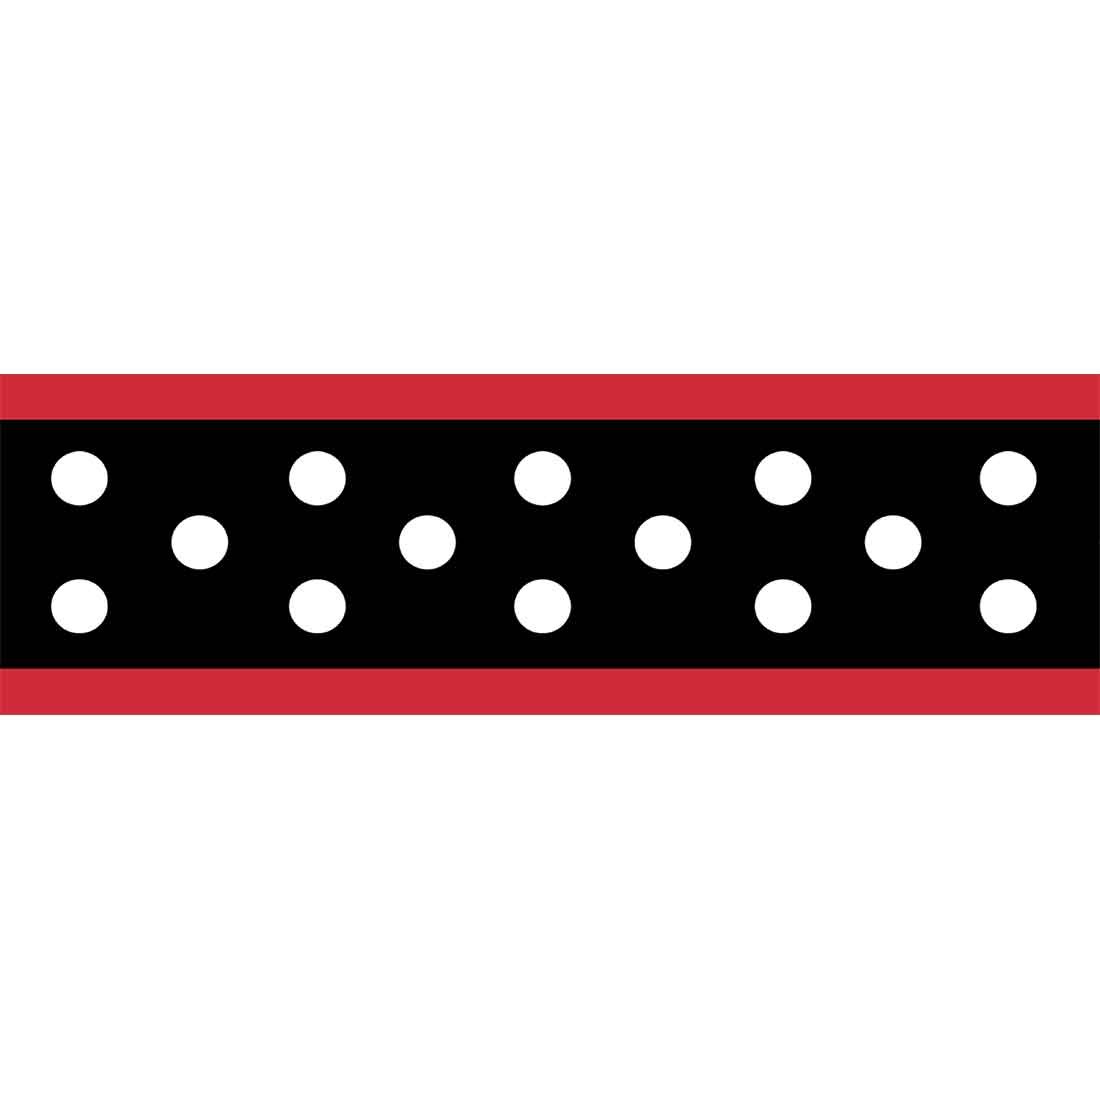 black-polka-dot-border-clip-art-20-free-cliparts-download-images-on